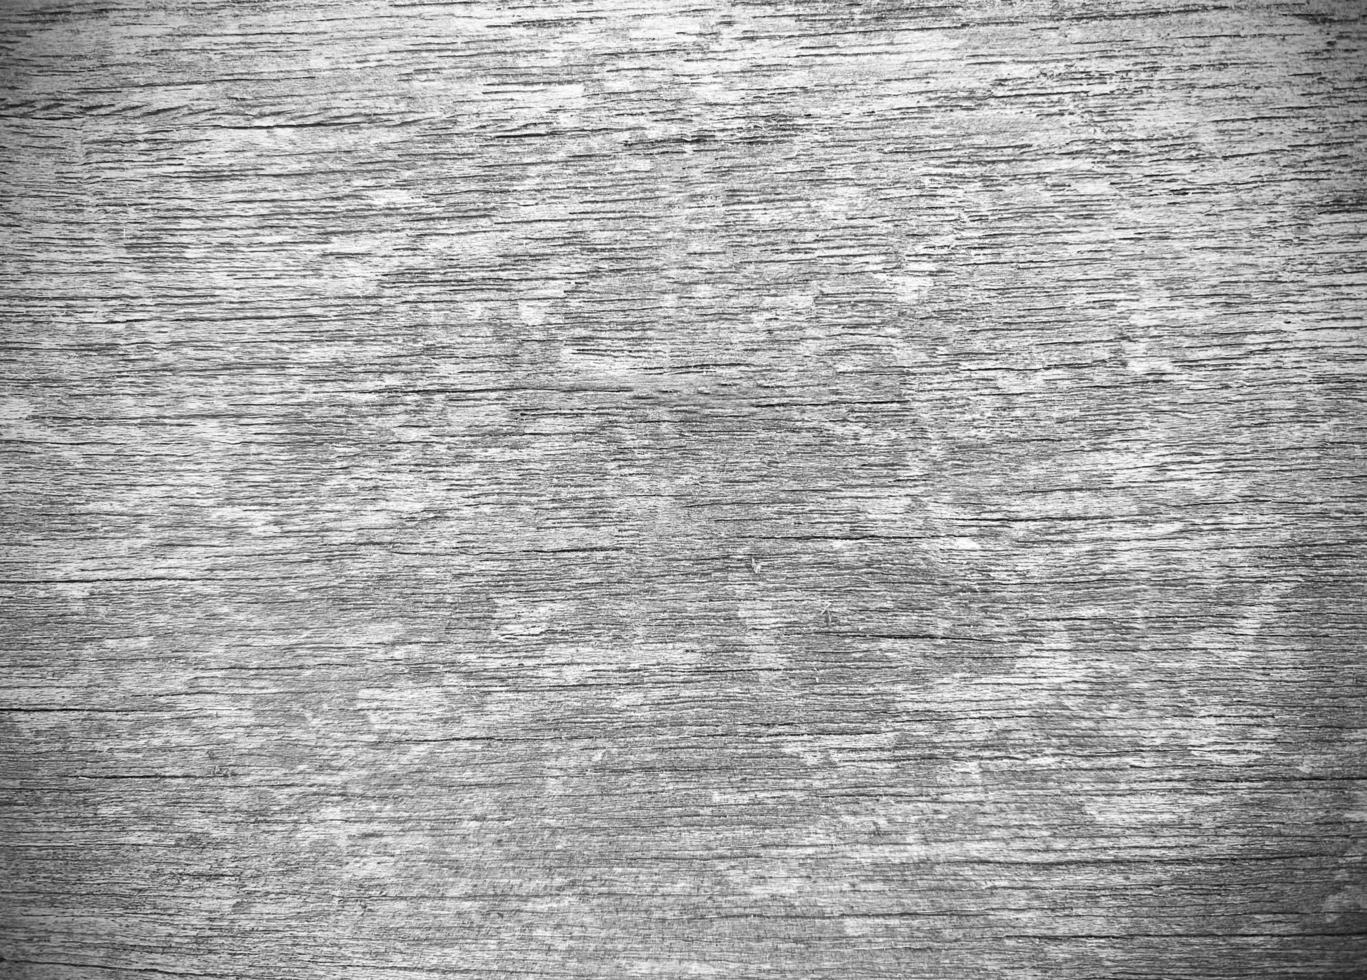 textura de madera con pintura blanca vieja. fondo de tablones de madera  blanca 3167452 Foto de stock en Vecteezy